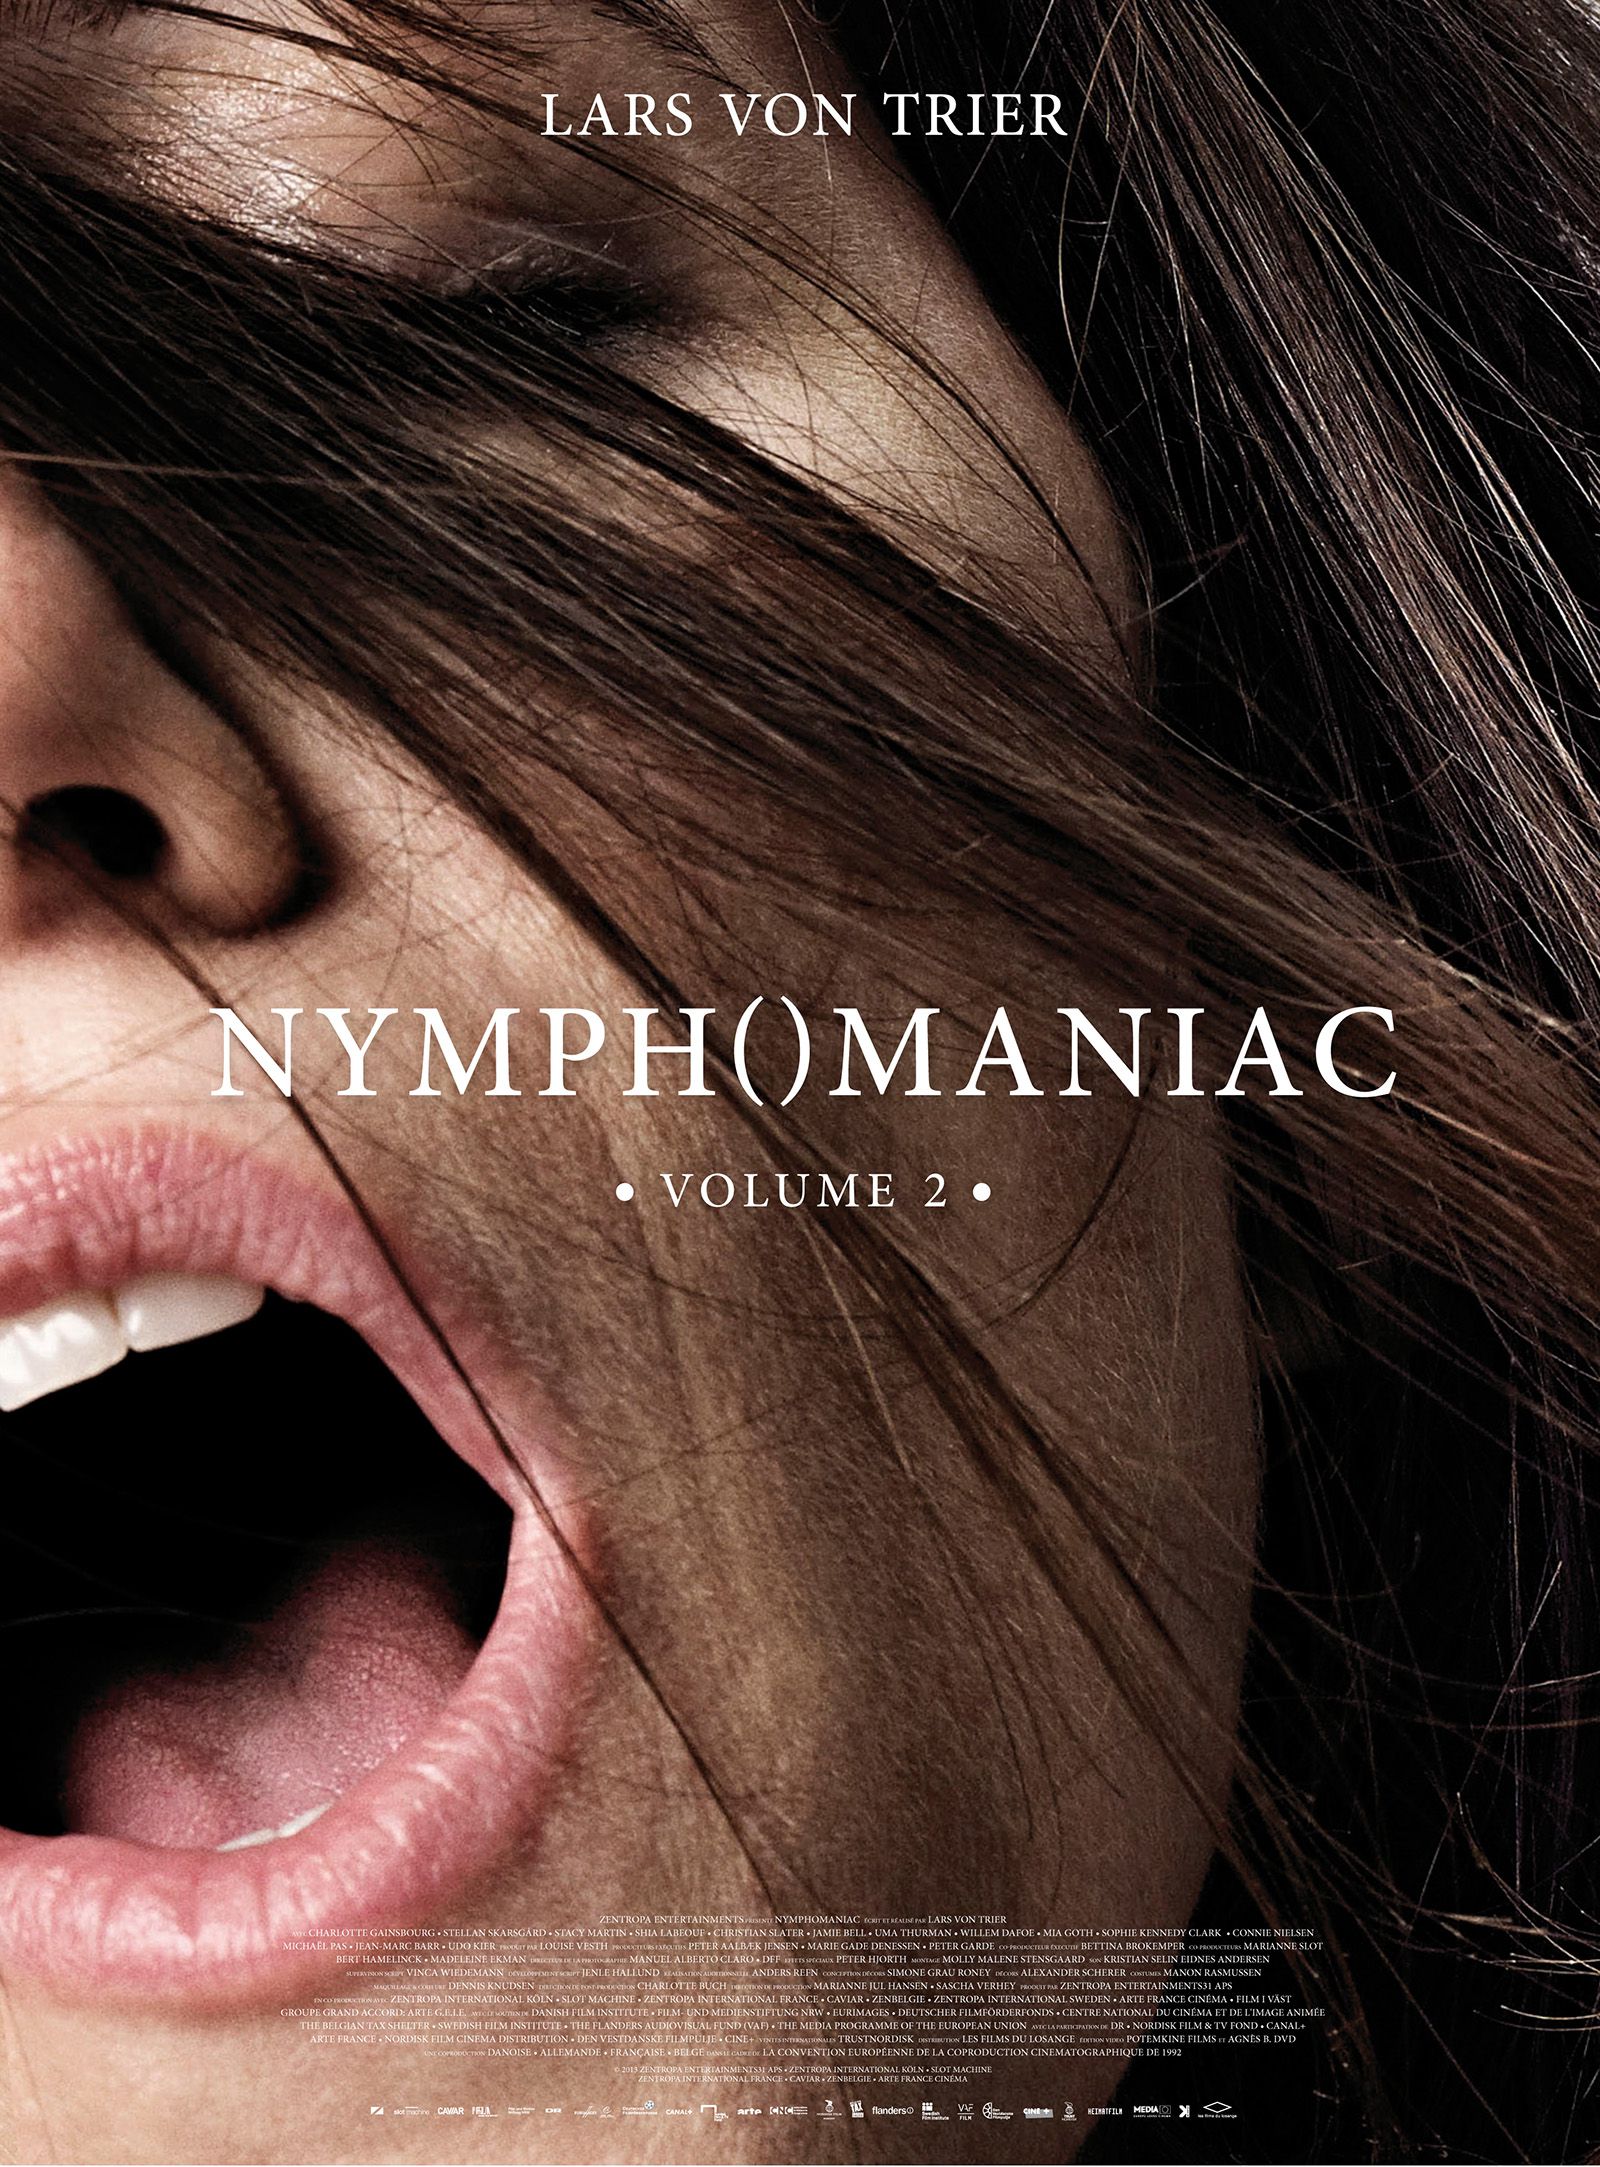 Nymphomaniac : Volume 2 - Film (2013) streaming VF gratuit complet